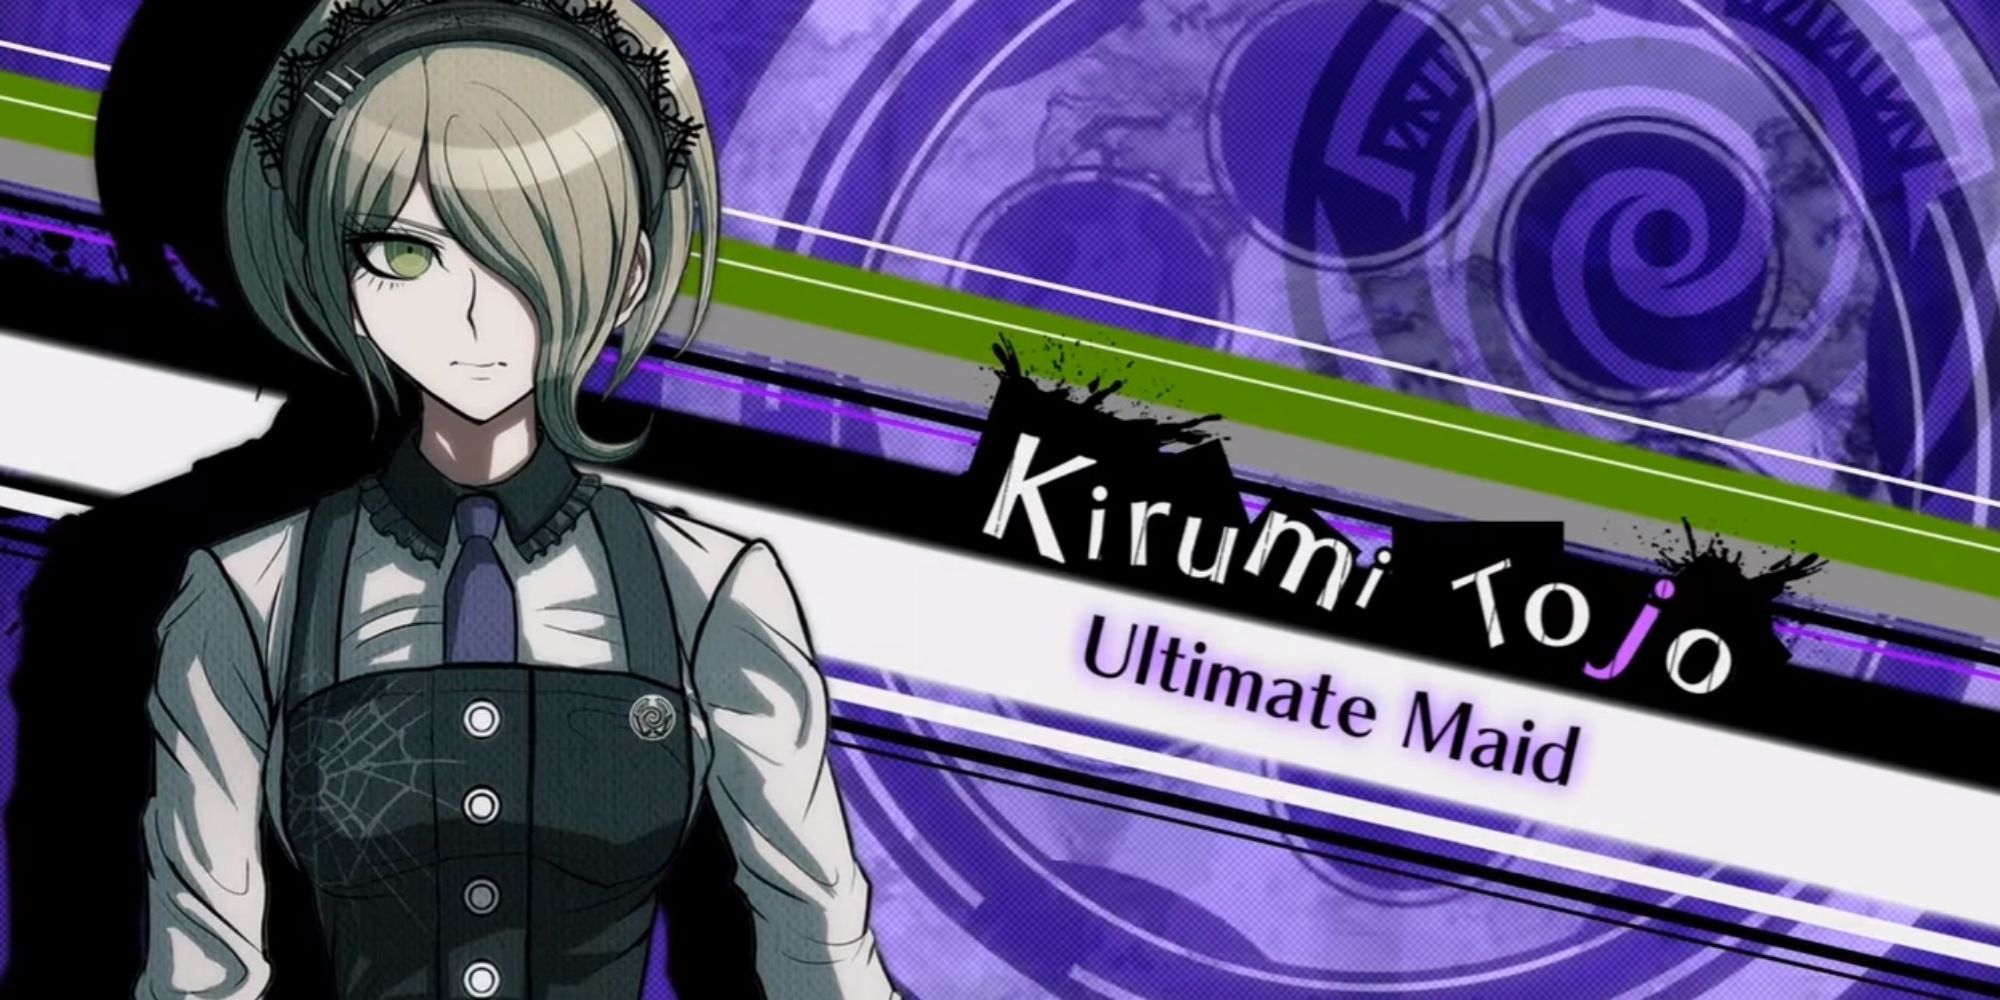 Kirumi Tojo the ultimate maid